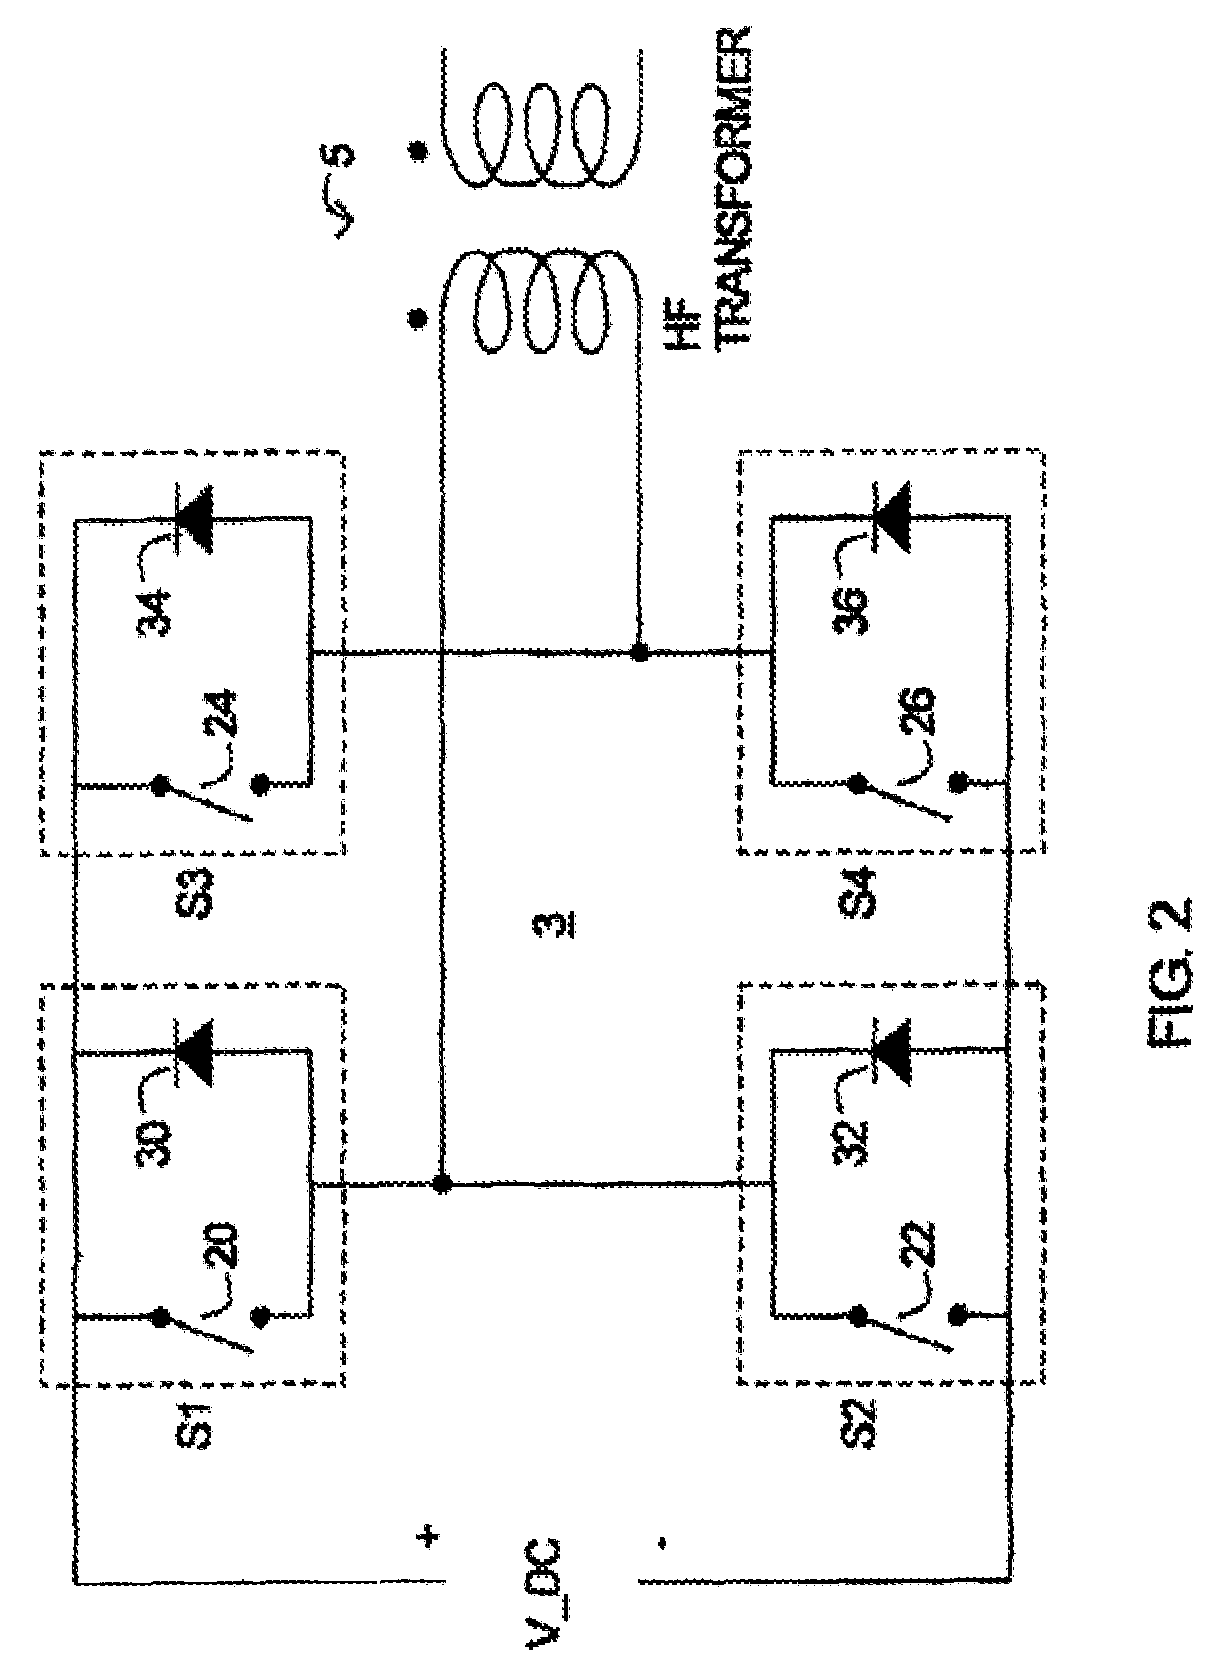 PWM method for cycloconverter